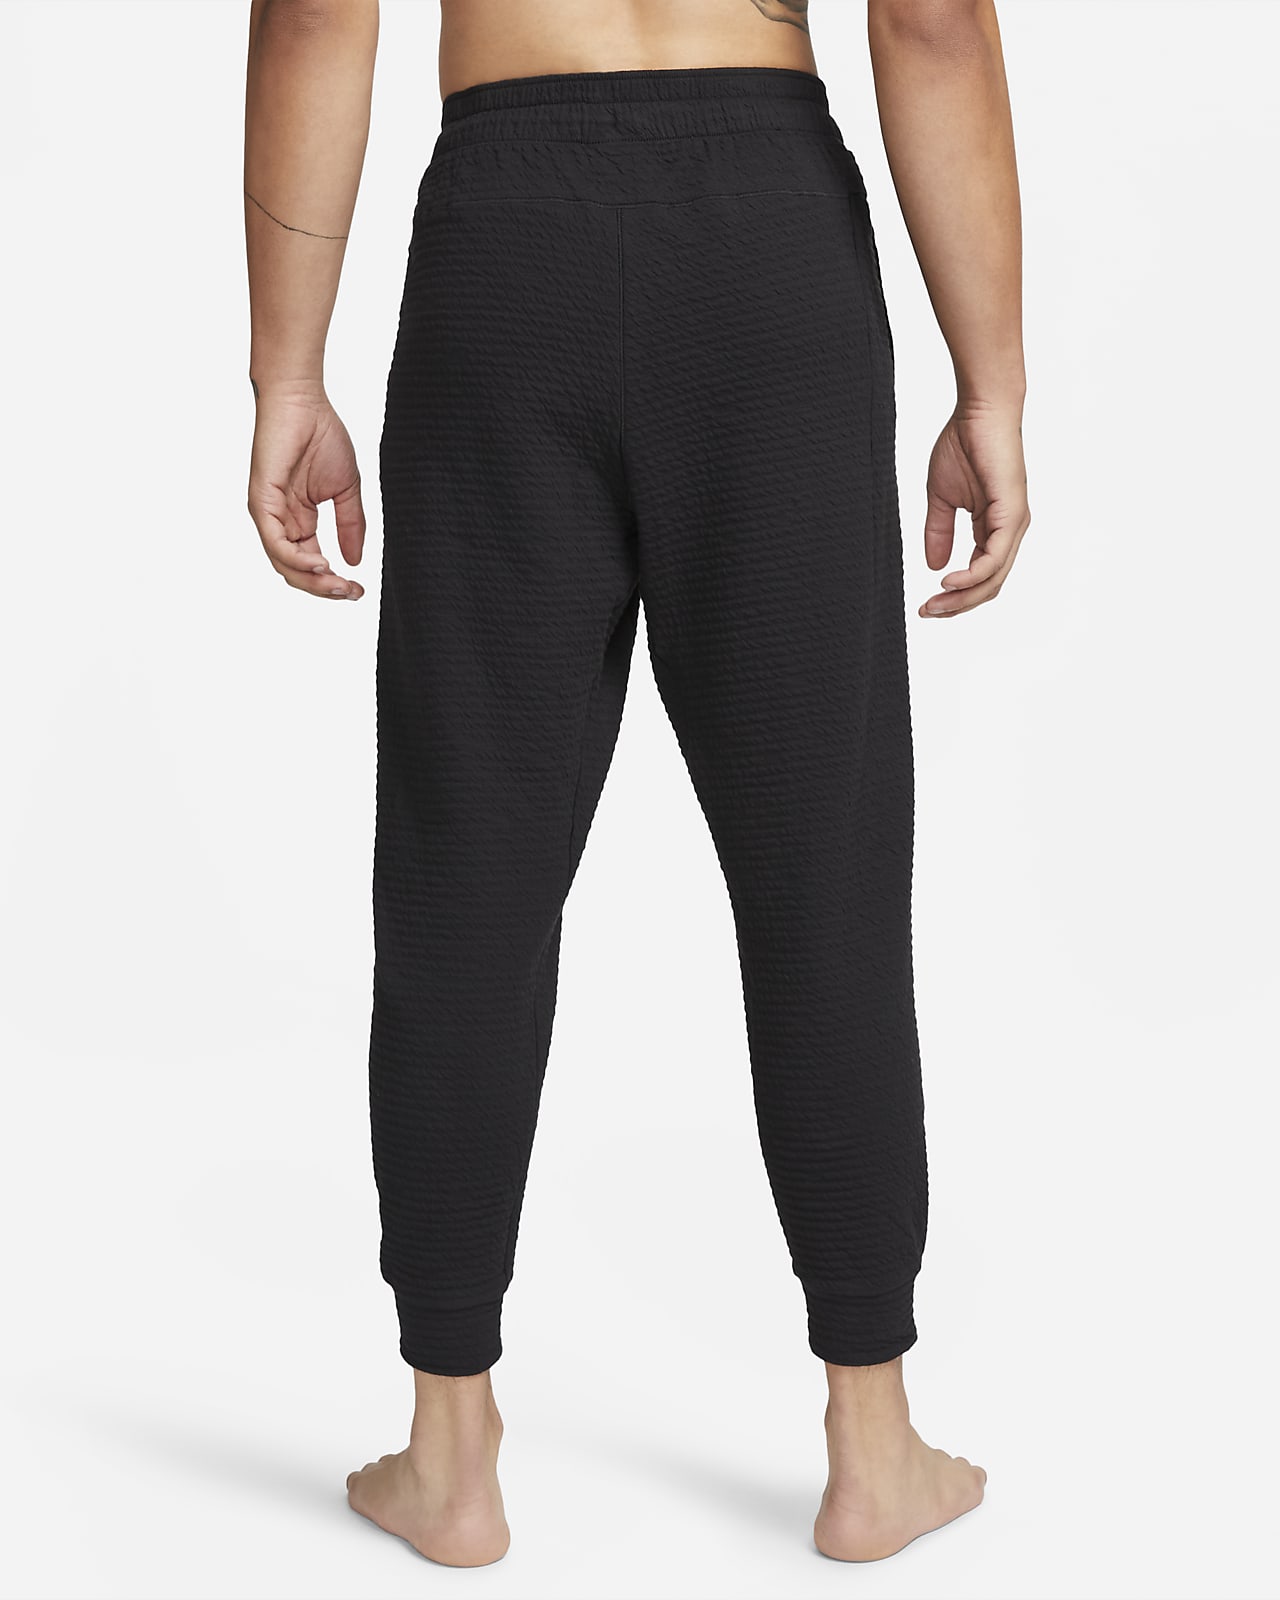 Nike Dri-Fit Yoga Training Pants AT5696-032 Size Medium